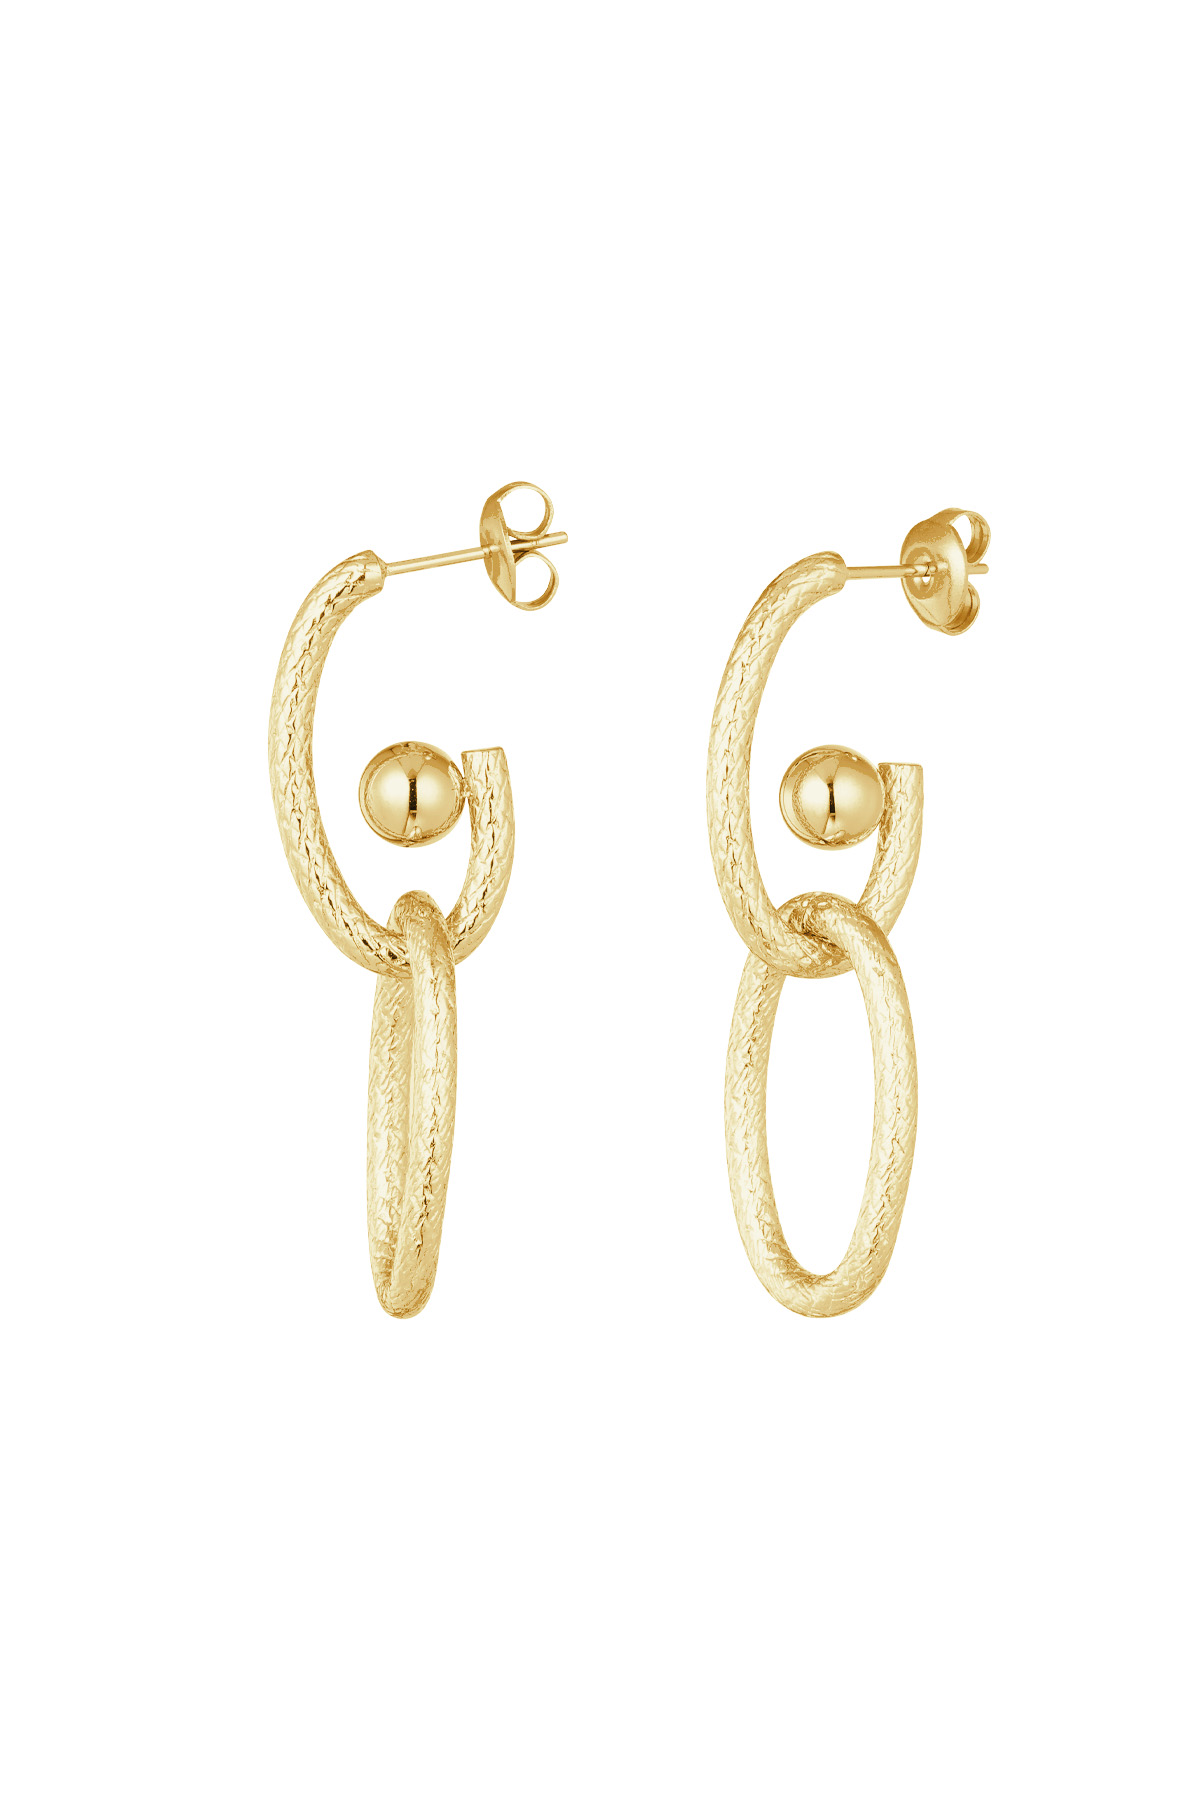 Aesthetic link earrings - gold 